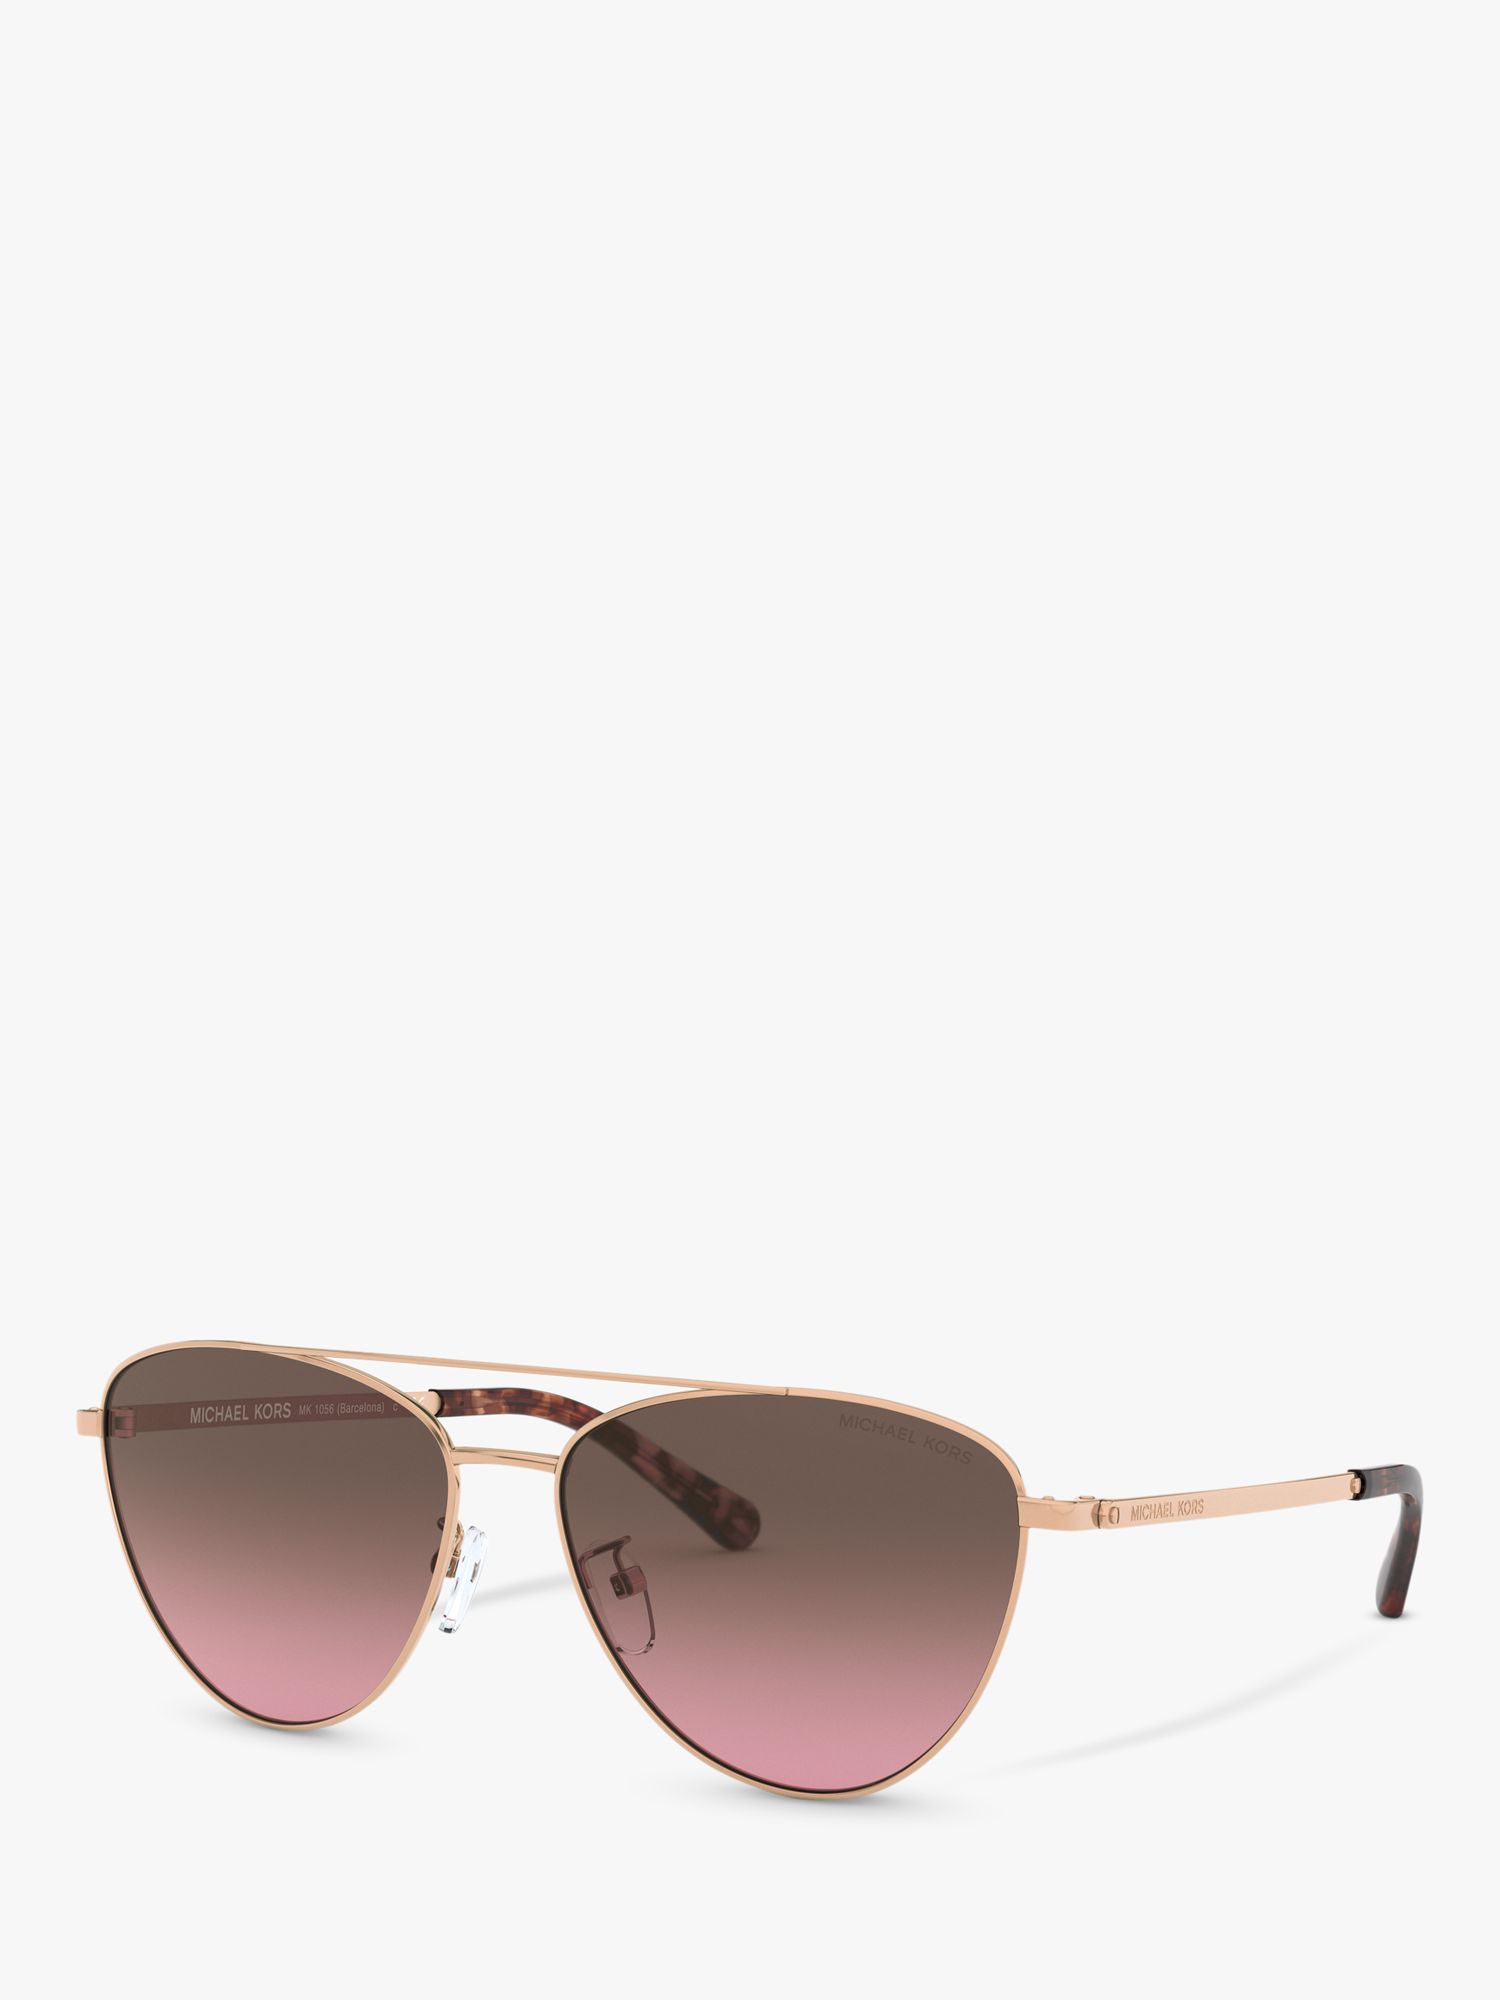 Michael Kors MK1056 Aviator Sunglasses 